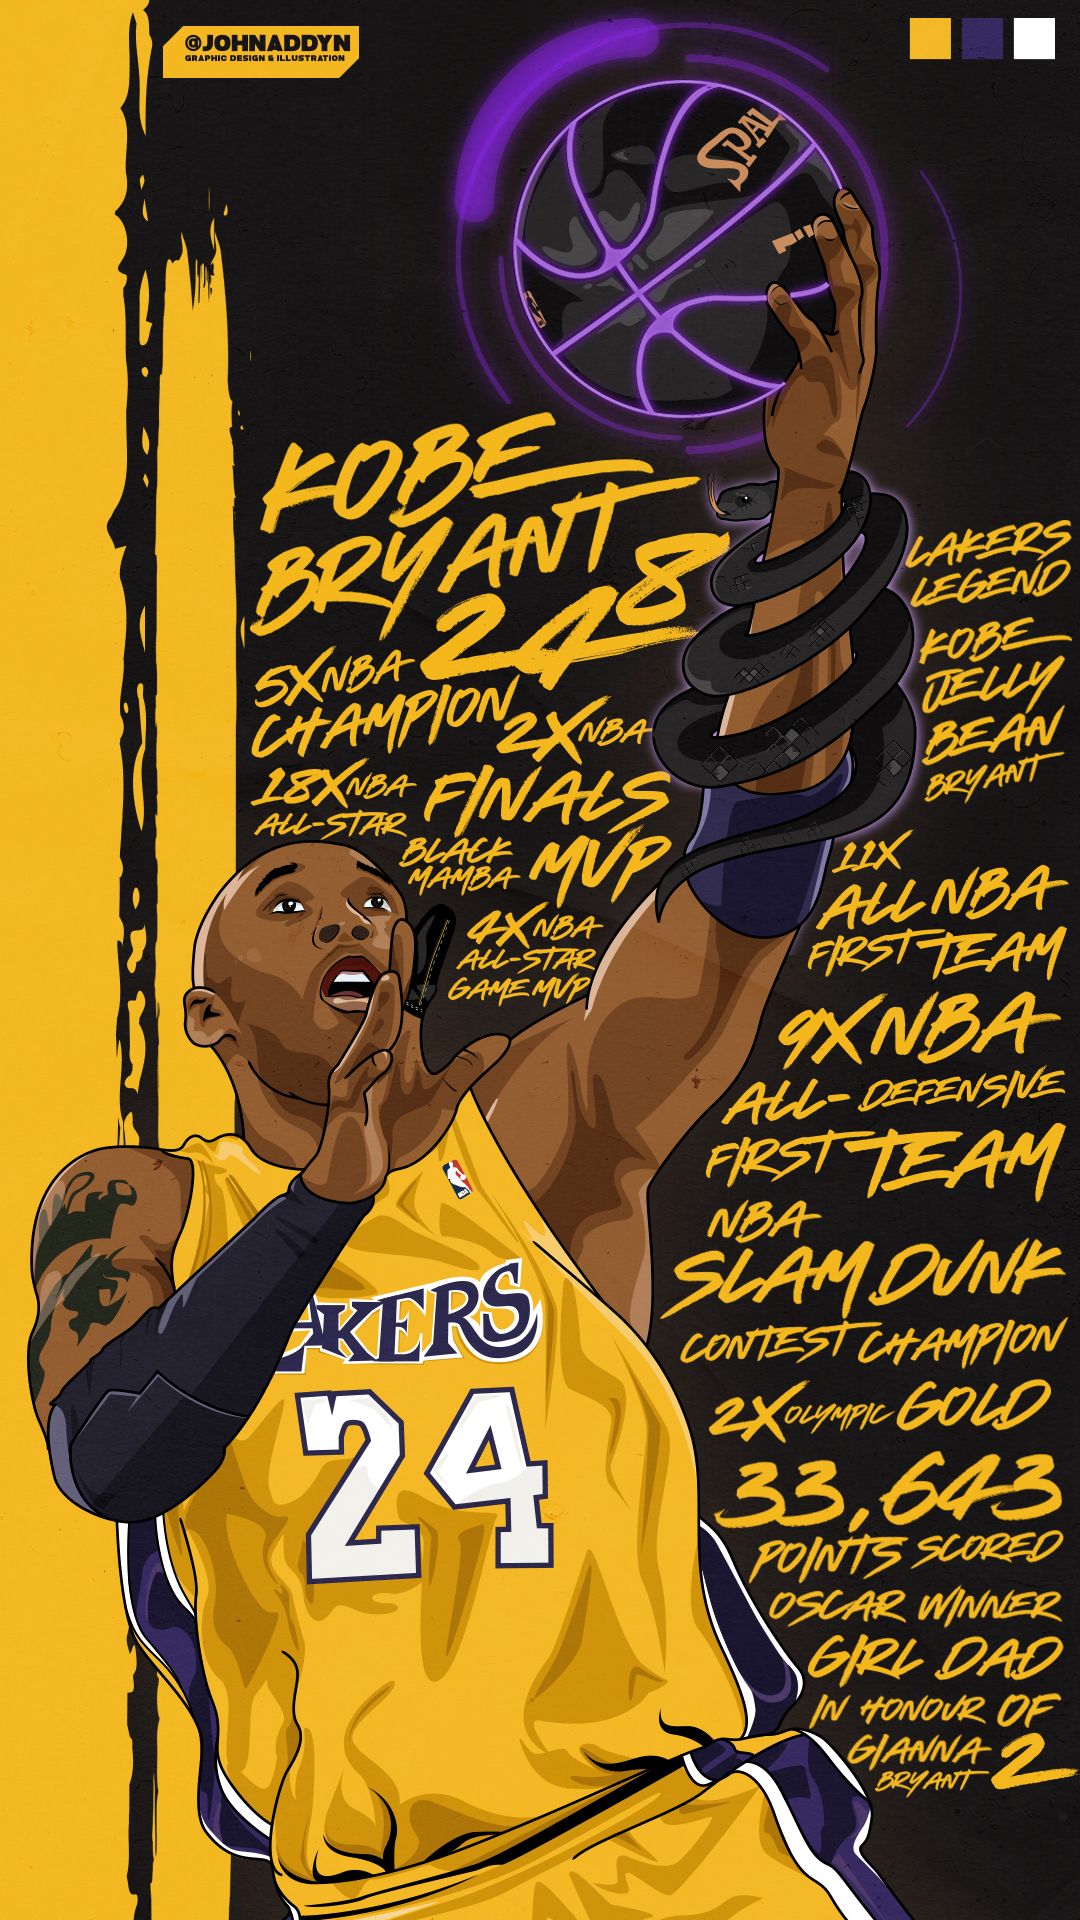 Animated Kobe Bryant Wallpapers